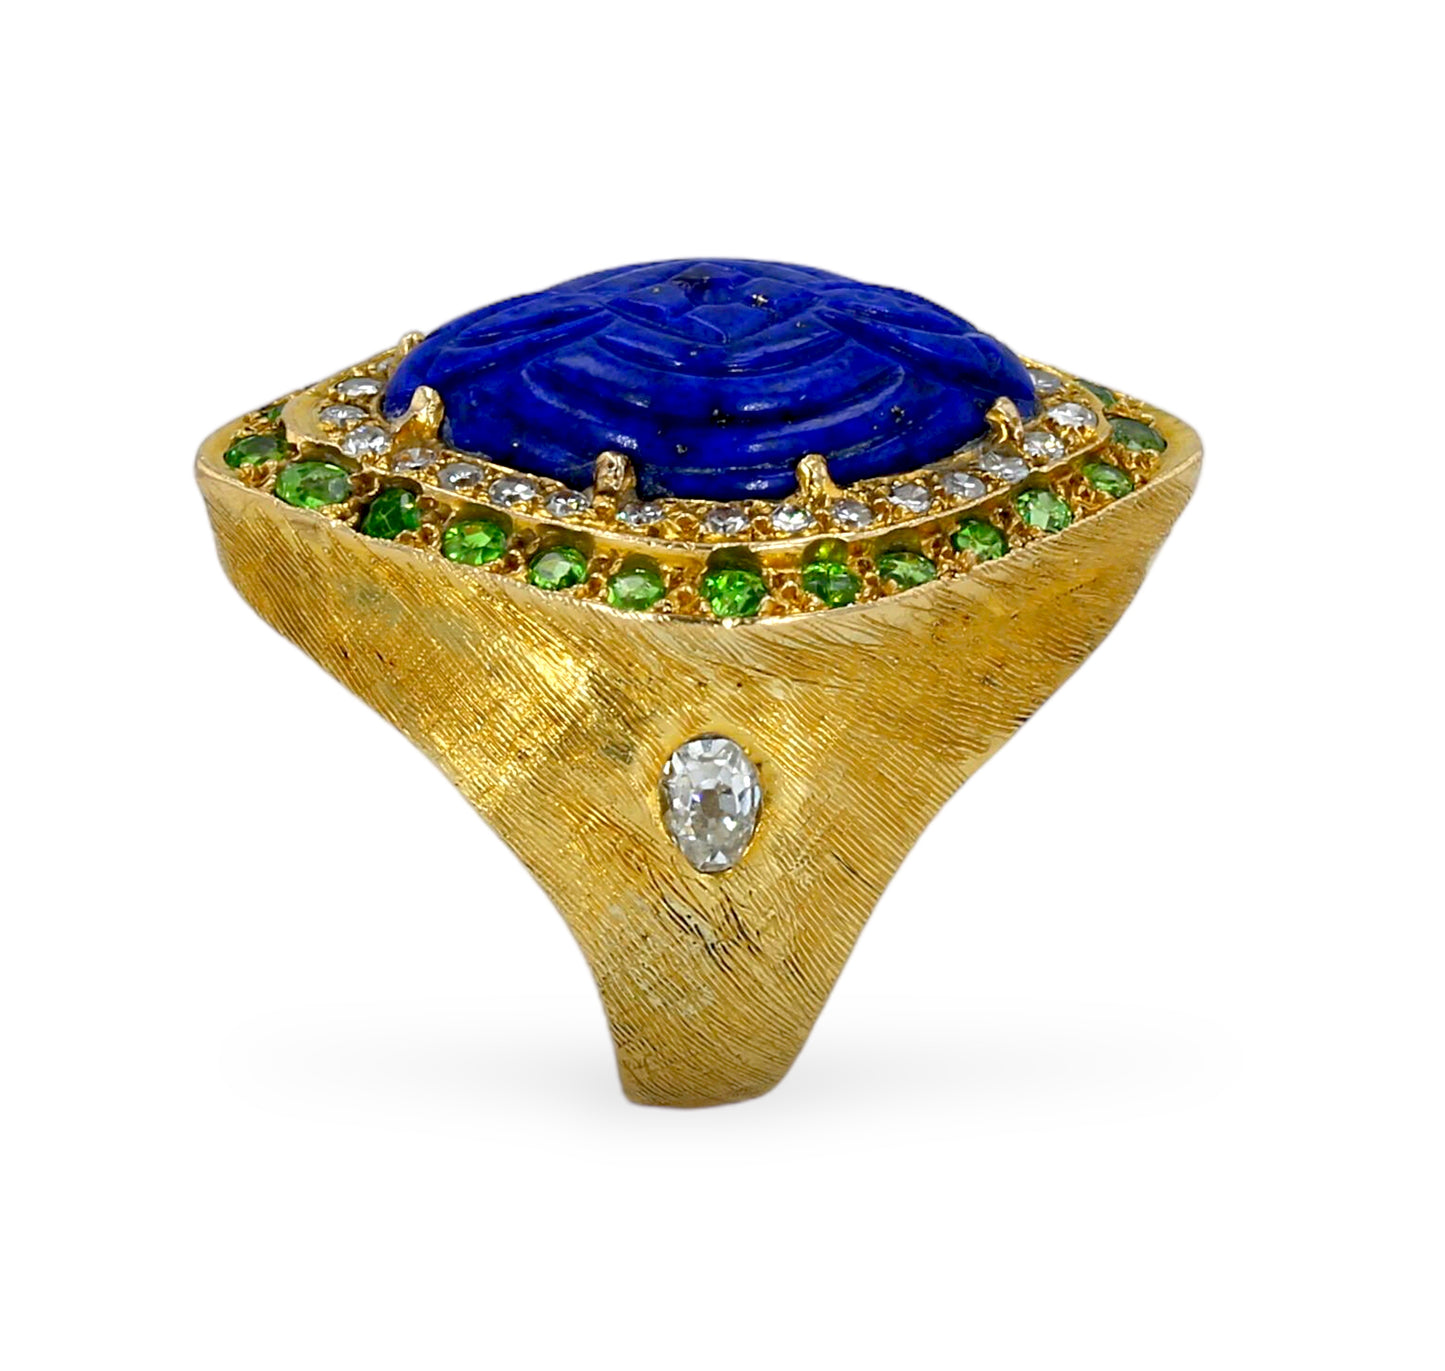 18k solid vintage yellow gold oval lapis lazuli carving diamonds round saborite ring